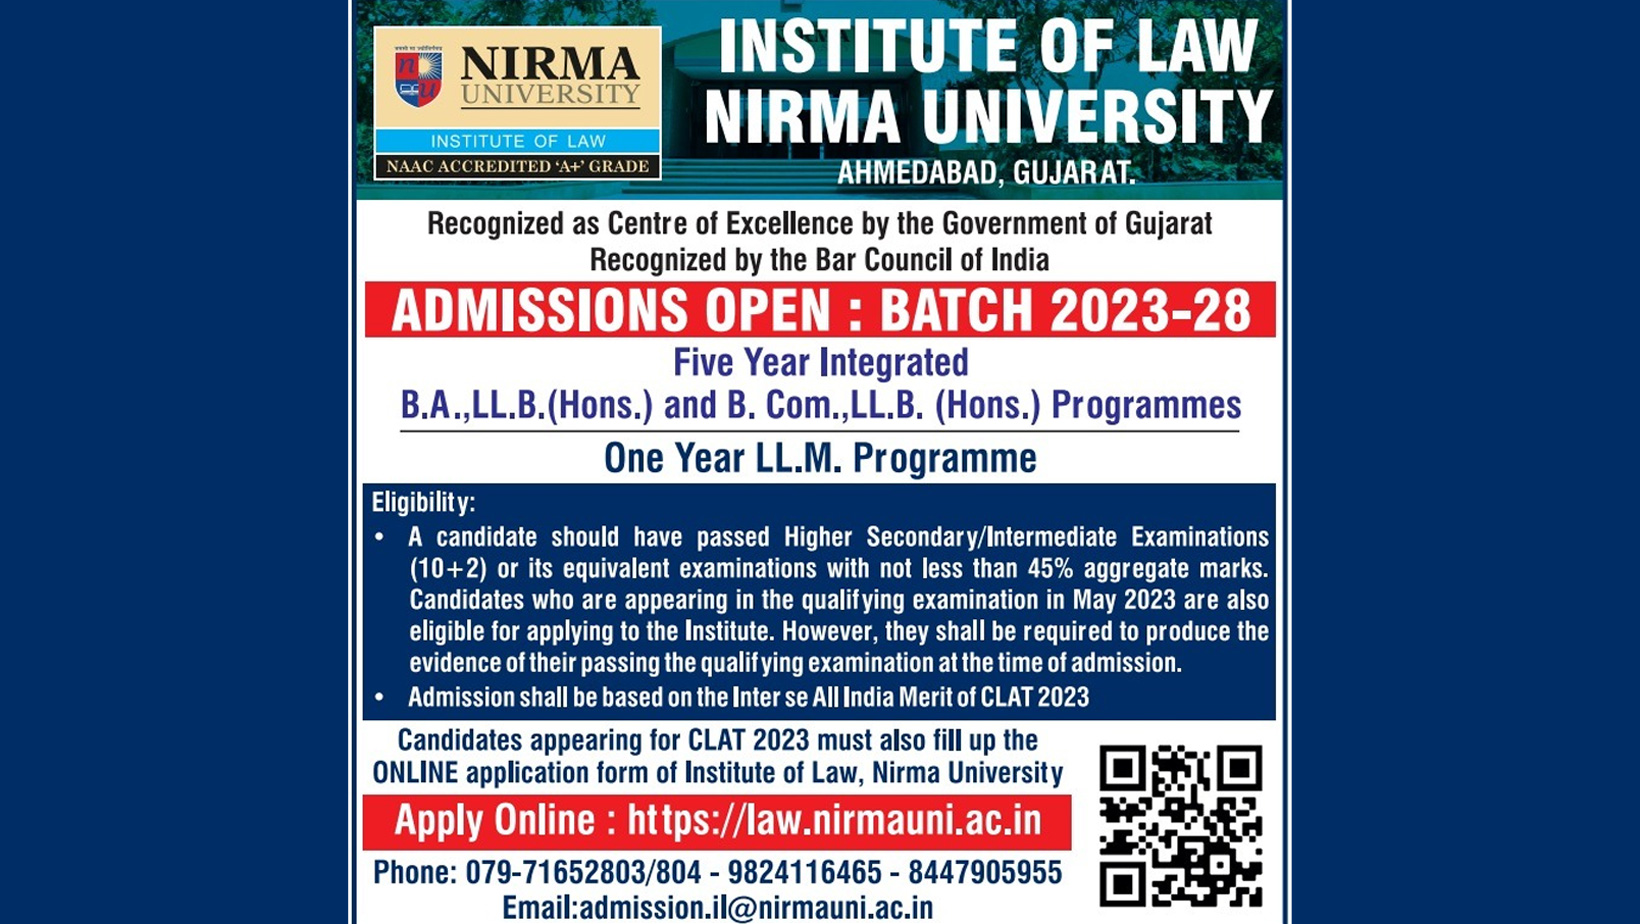 Institute of Law, Nirma University: Admission Notification [Batch 2023-28]